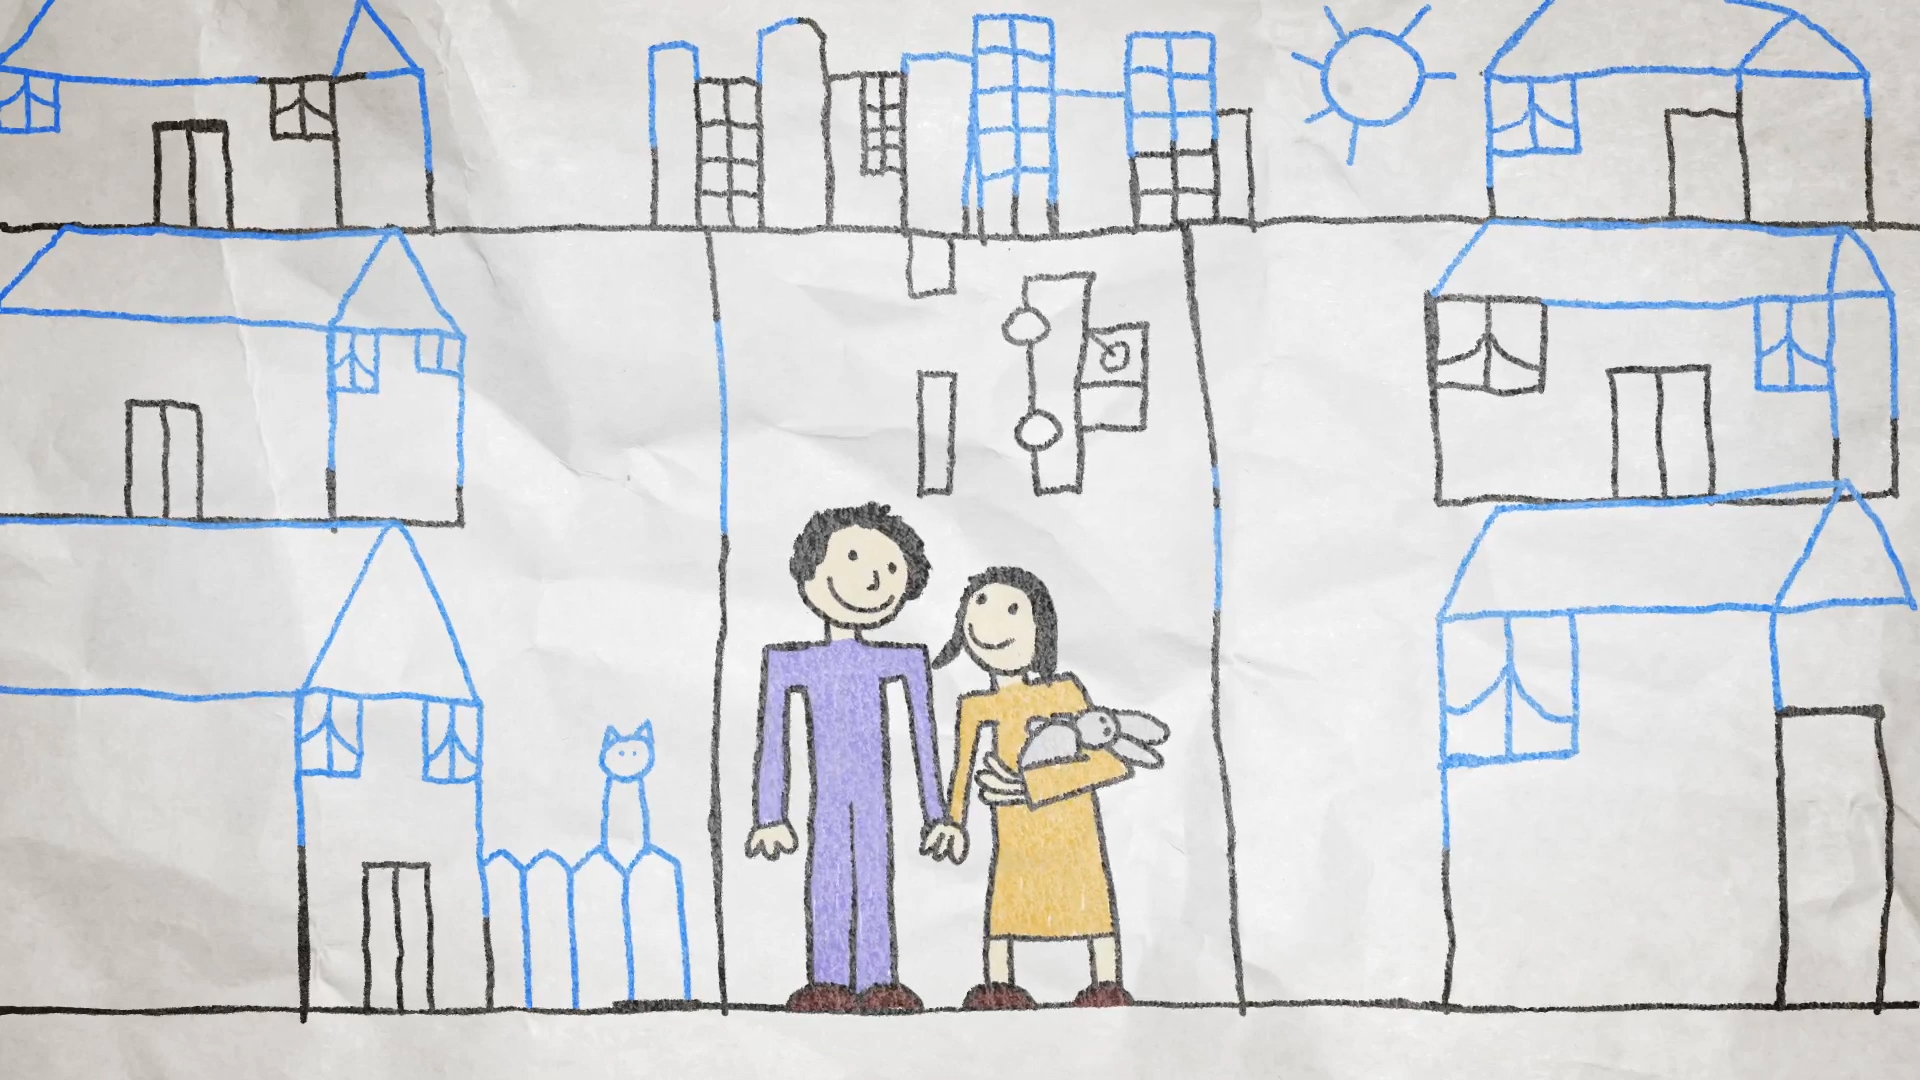 UNICEF – “A remény rajzai” campaign film